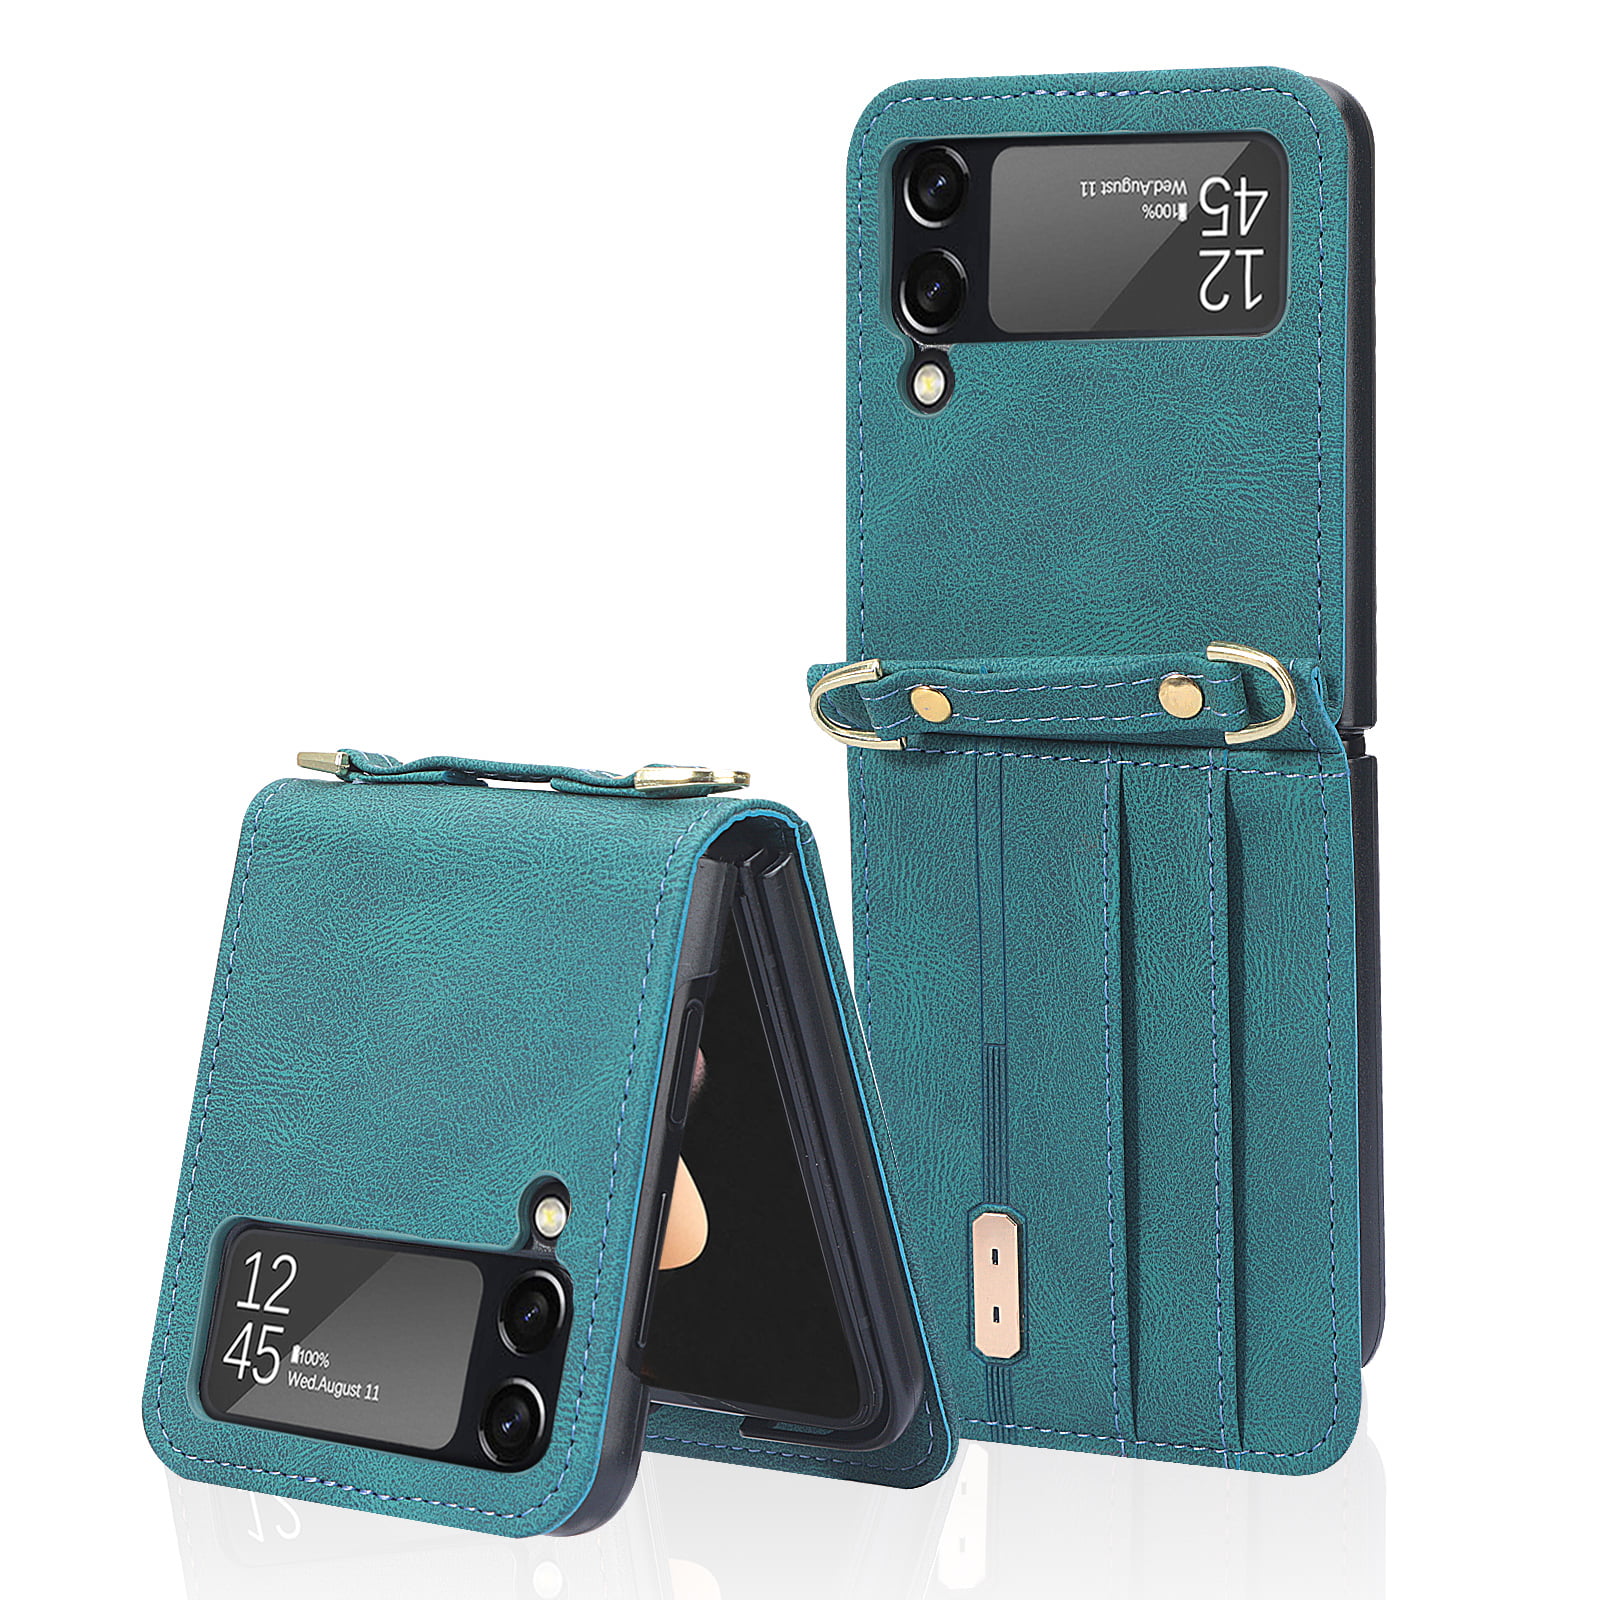 Z Flip 3 Case, Galaxy Z Flip 3 Wallet Case, Allytech Premium PU